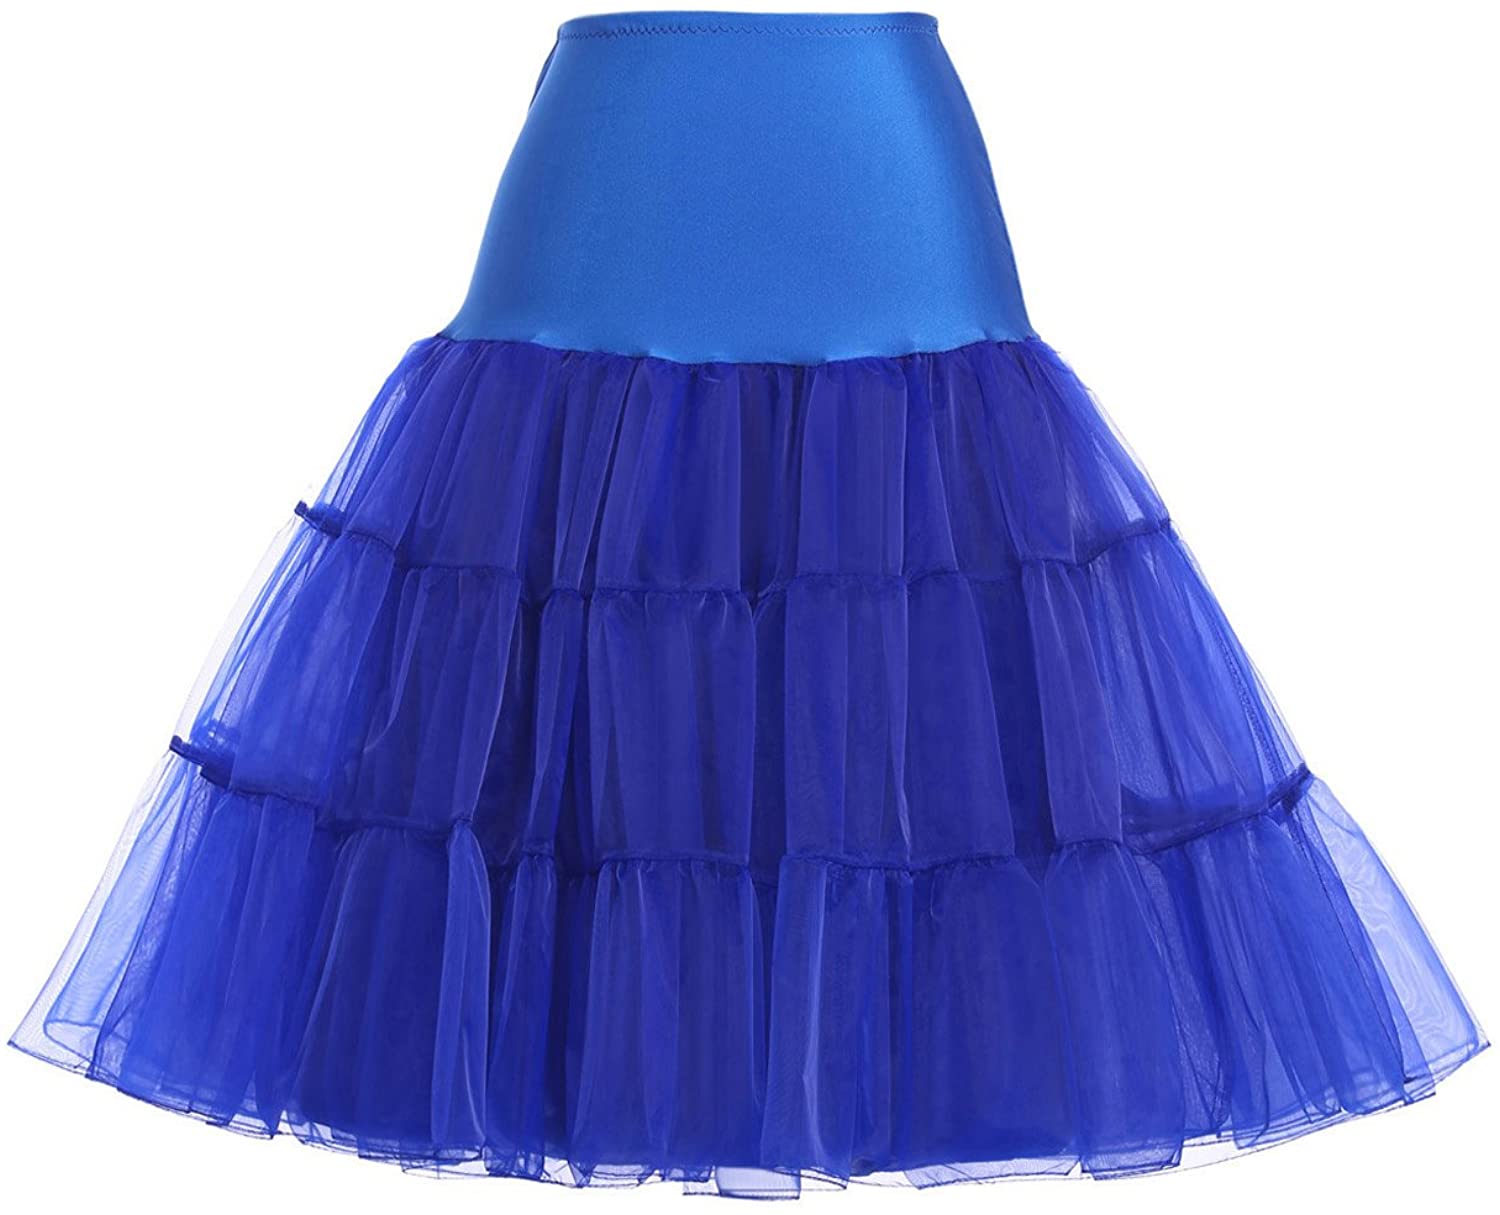 GRACE KARIN 50s Petticoat Skirt Rockabilly Dress Crinoline Tutu Underskirts for Women